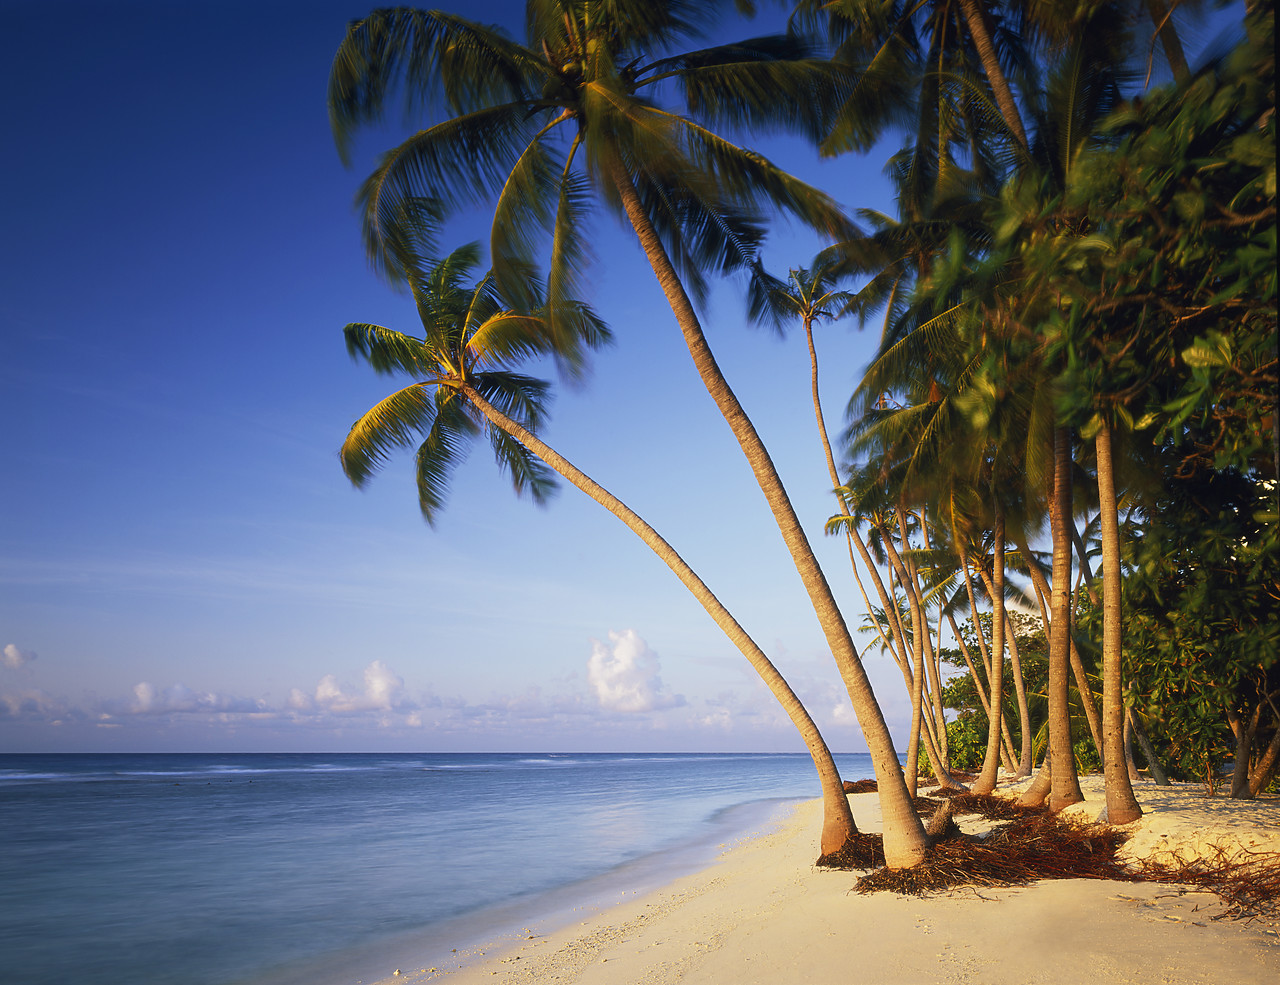 #080043-1 - Deserted Palm Fringed Beach, Kuredu, Maldives